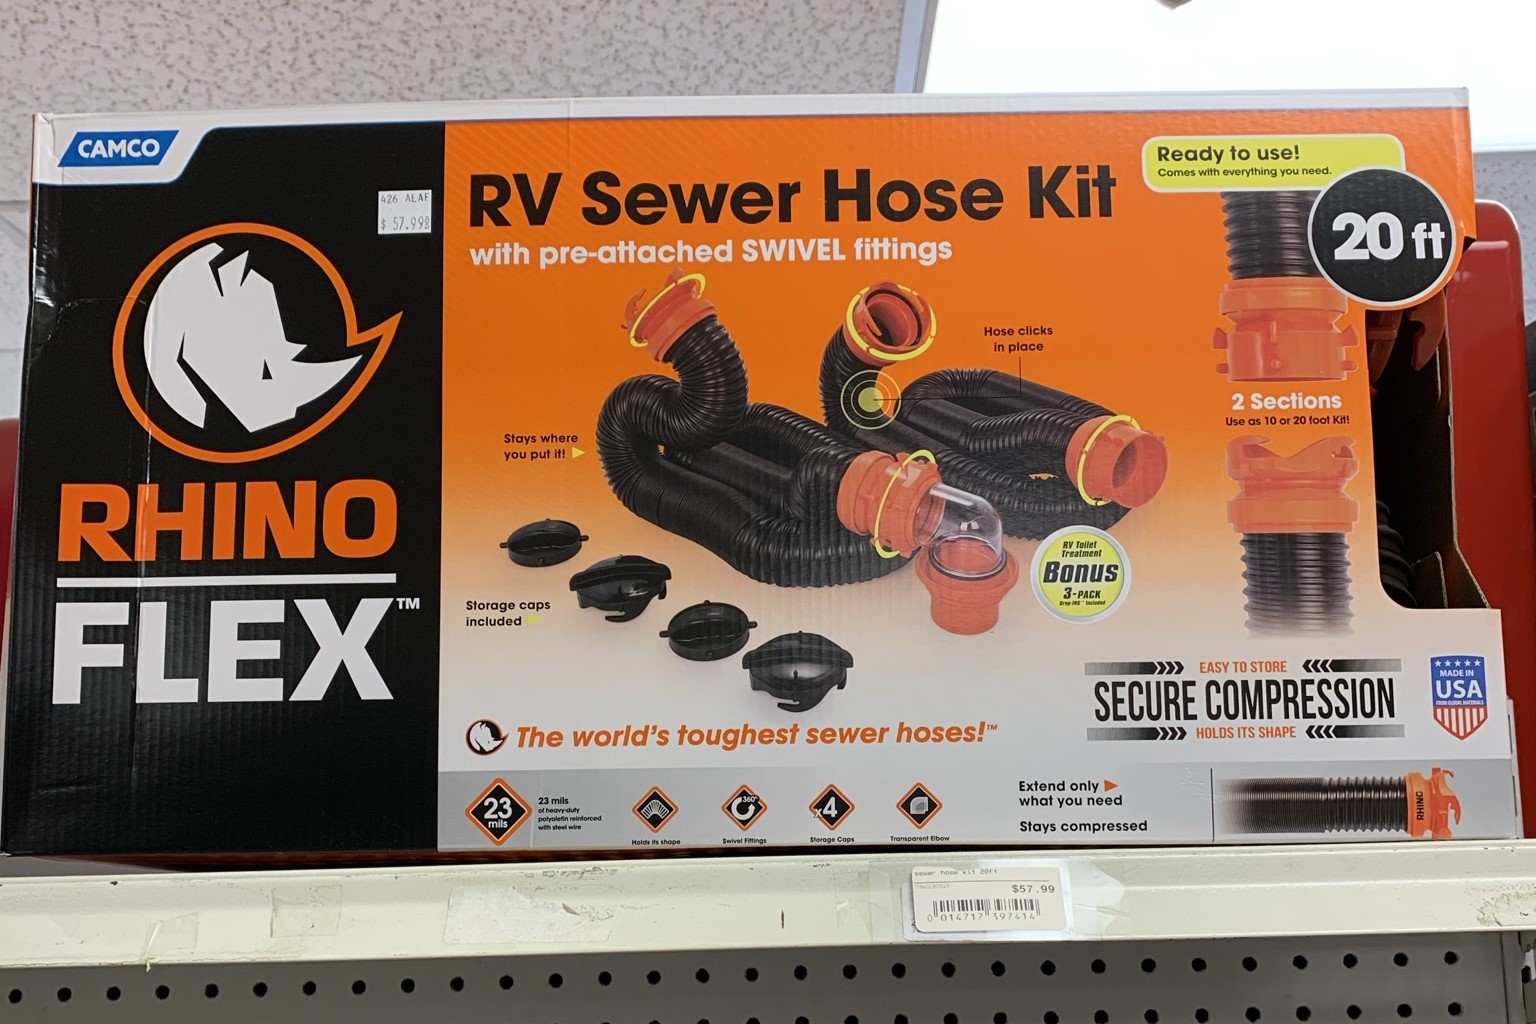 A Camco Rhino Flex RV Sewer Hose Kit